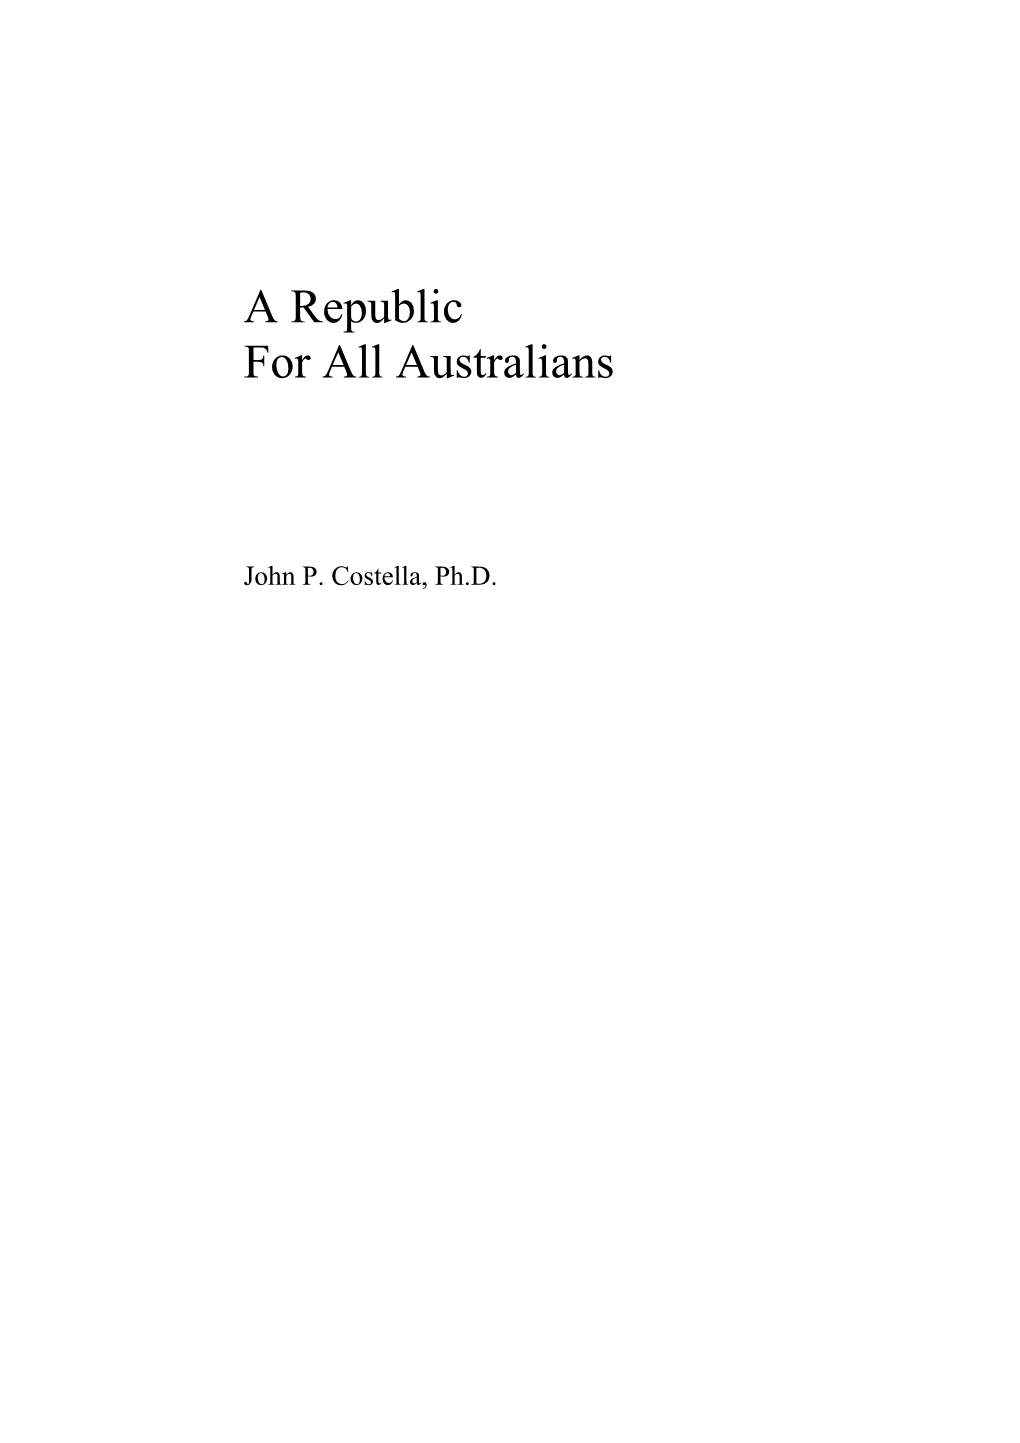 A Republic for All Australians